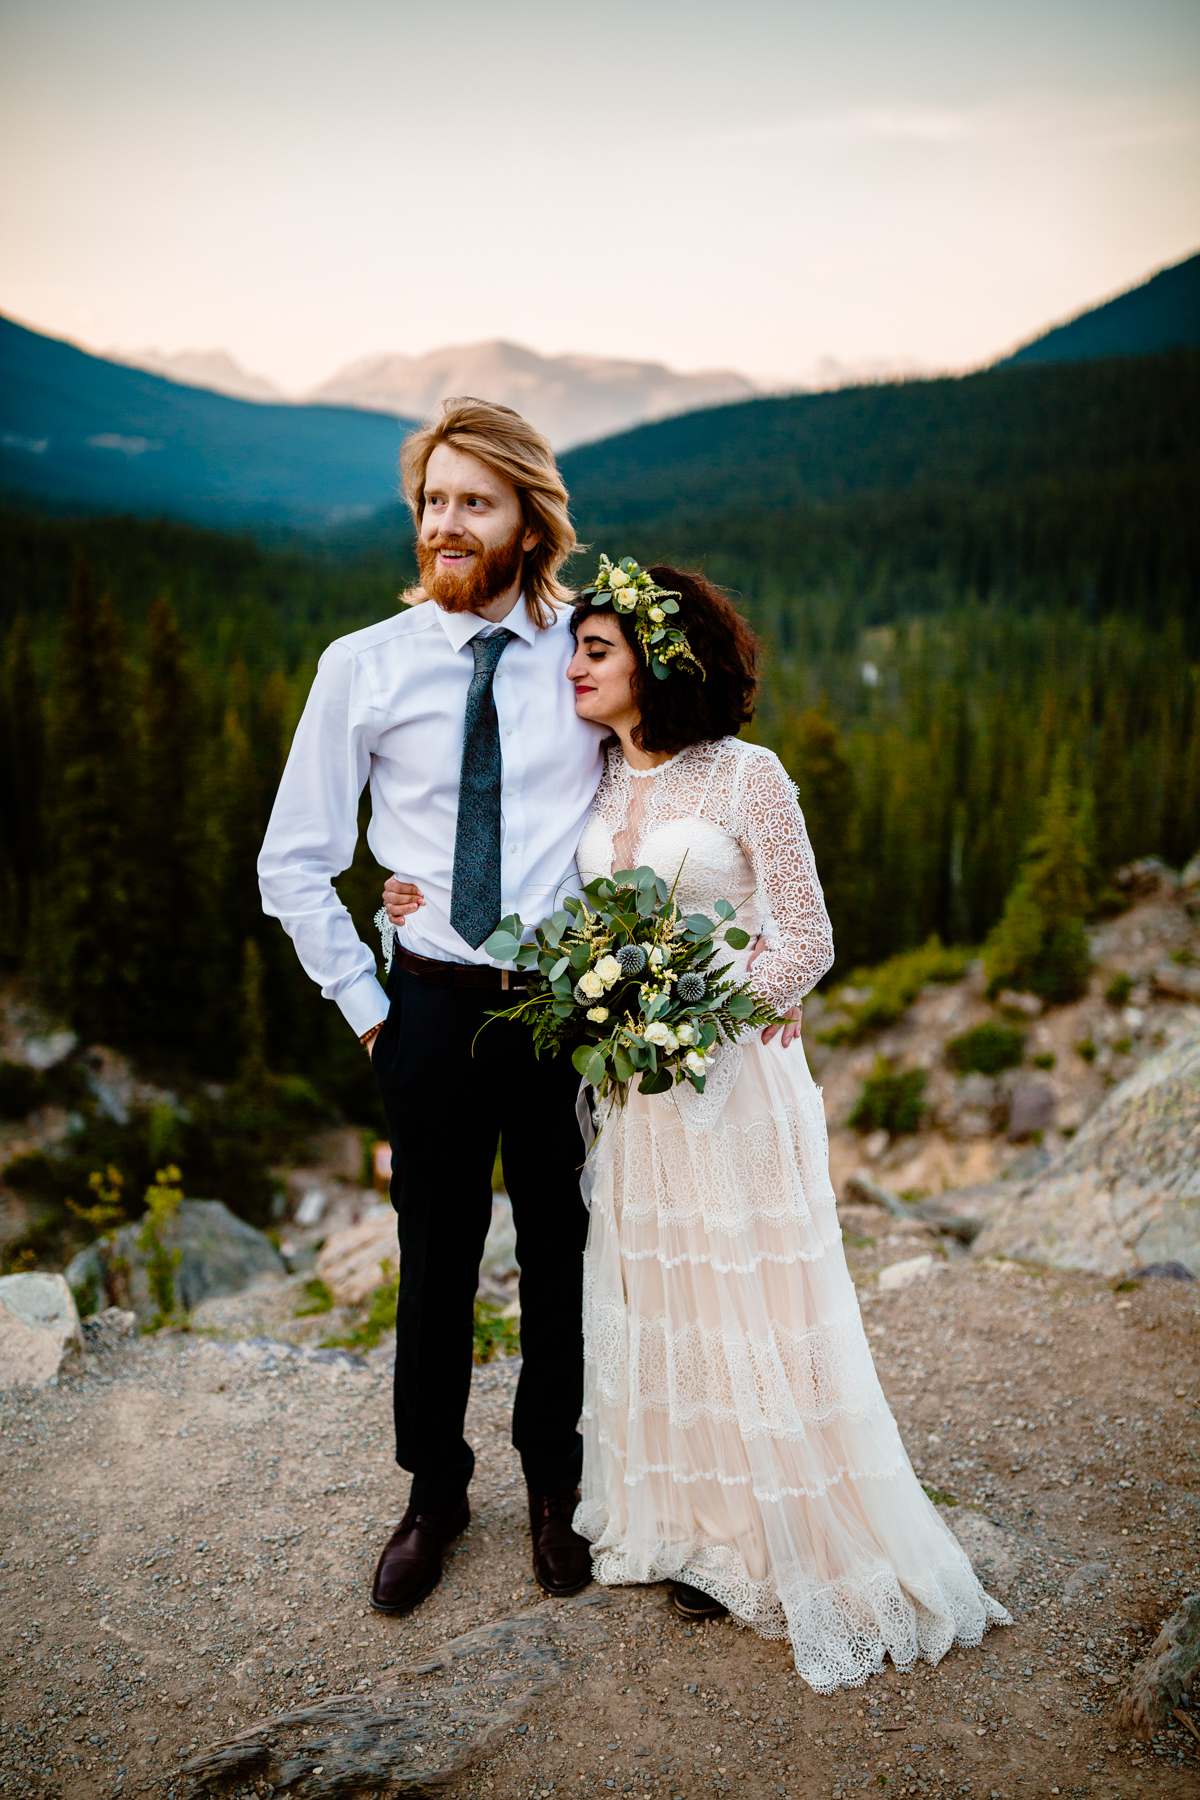 Banff Photographers at a Moraine Lake Post-Wedding Adventure Session - Photo 26